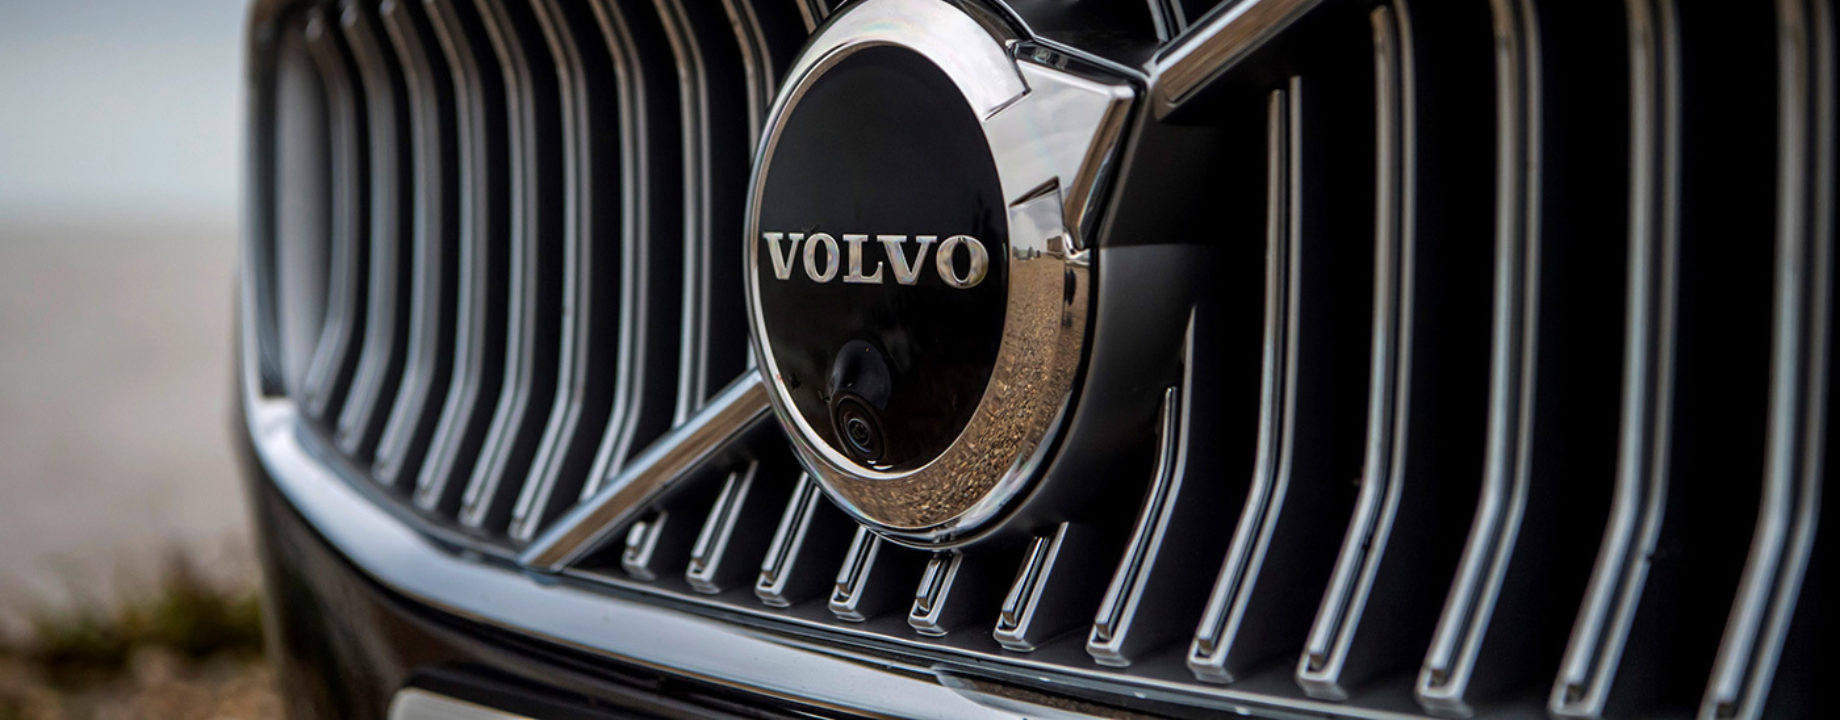 Volvo logo on grill 01